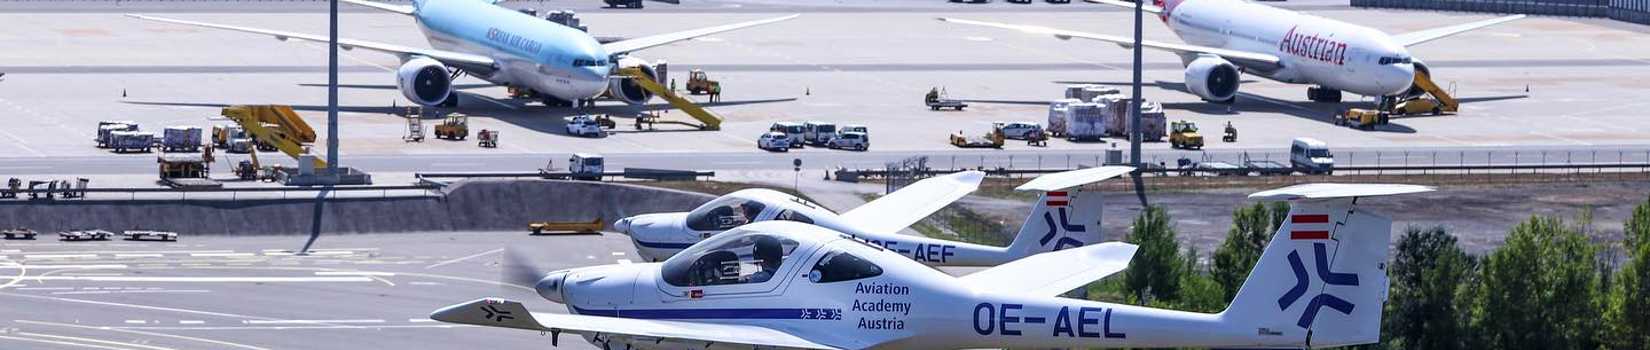 Aviation Academy Austria